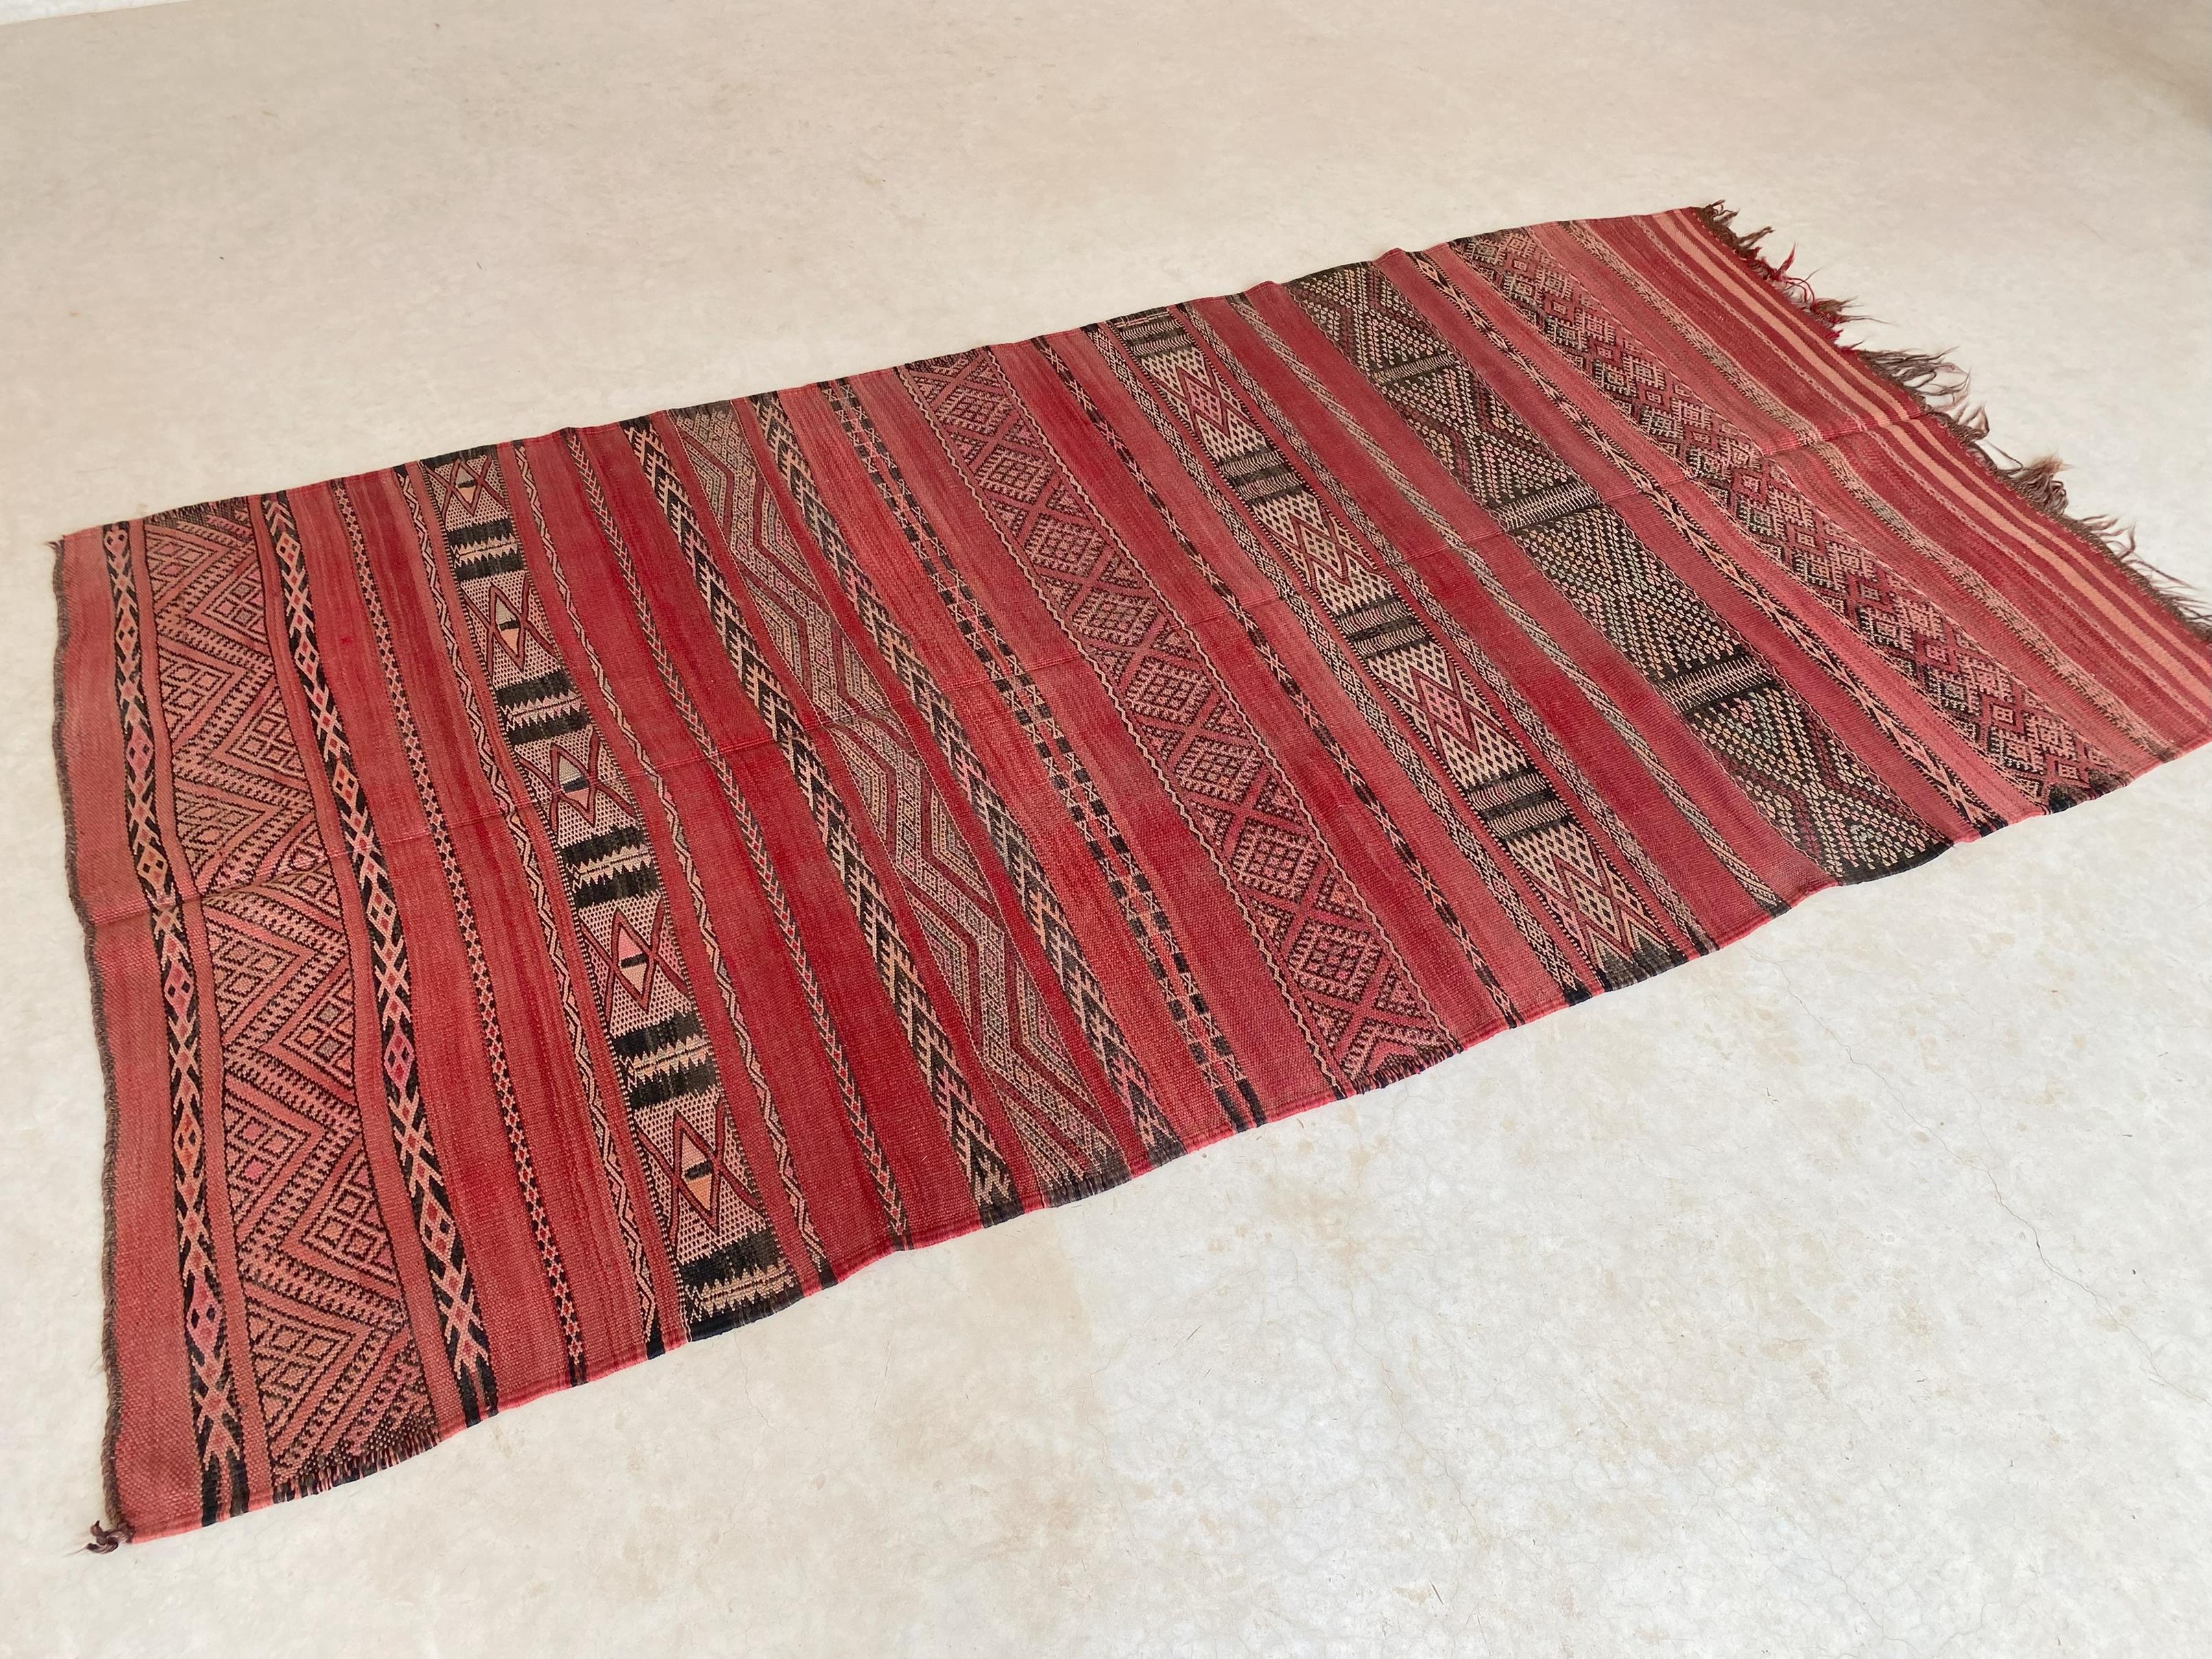 20th Century Vintage Moroccan Kilim rug - Red - 5x9.2feet / 152x282cm For Sale